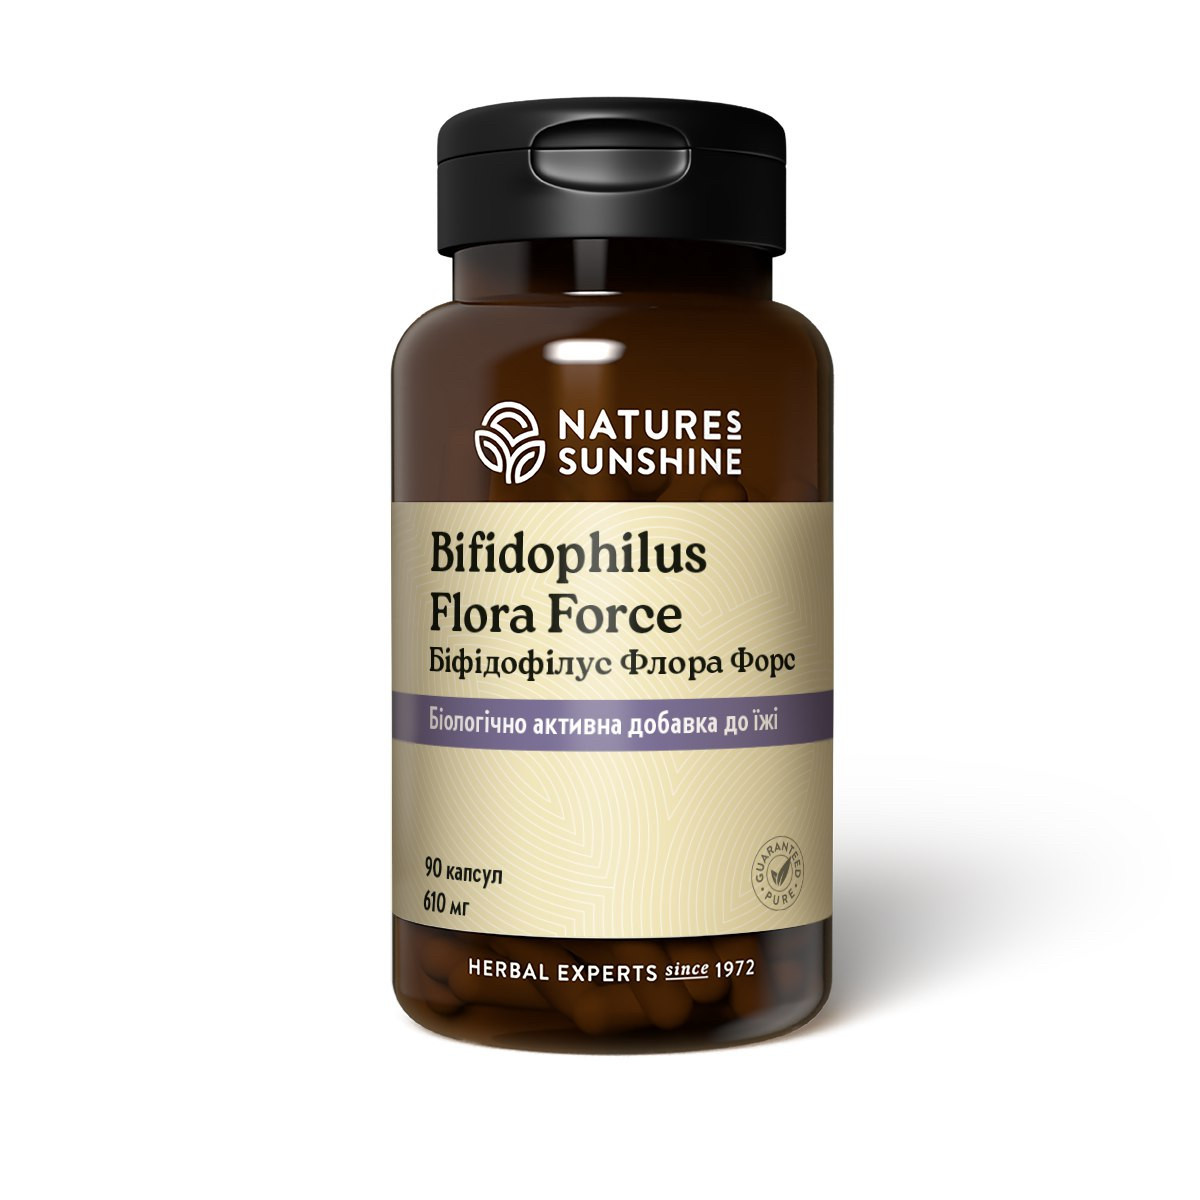 Bifidophilus Flora Force, Біфідофілус Флора Форс, БФФ, 90 капсул, Nature's Sunshine Products, США